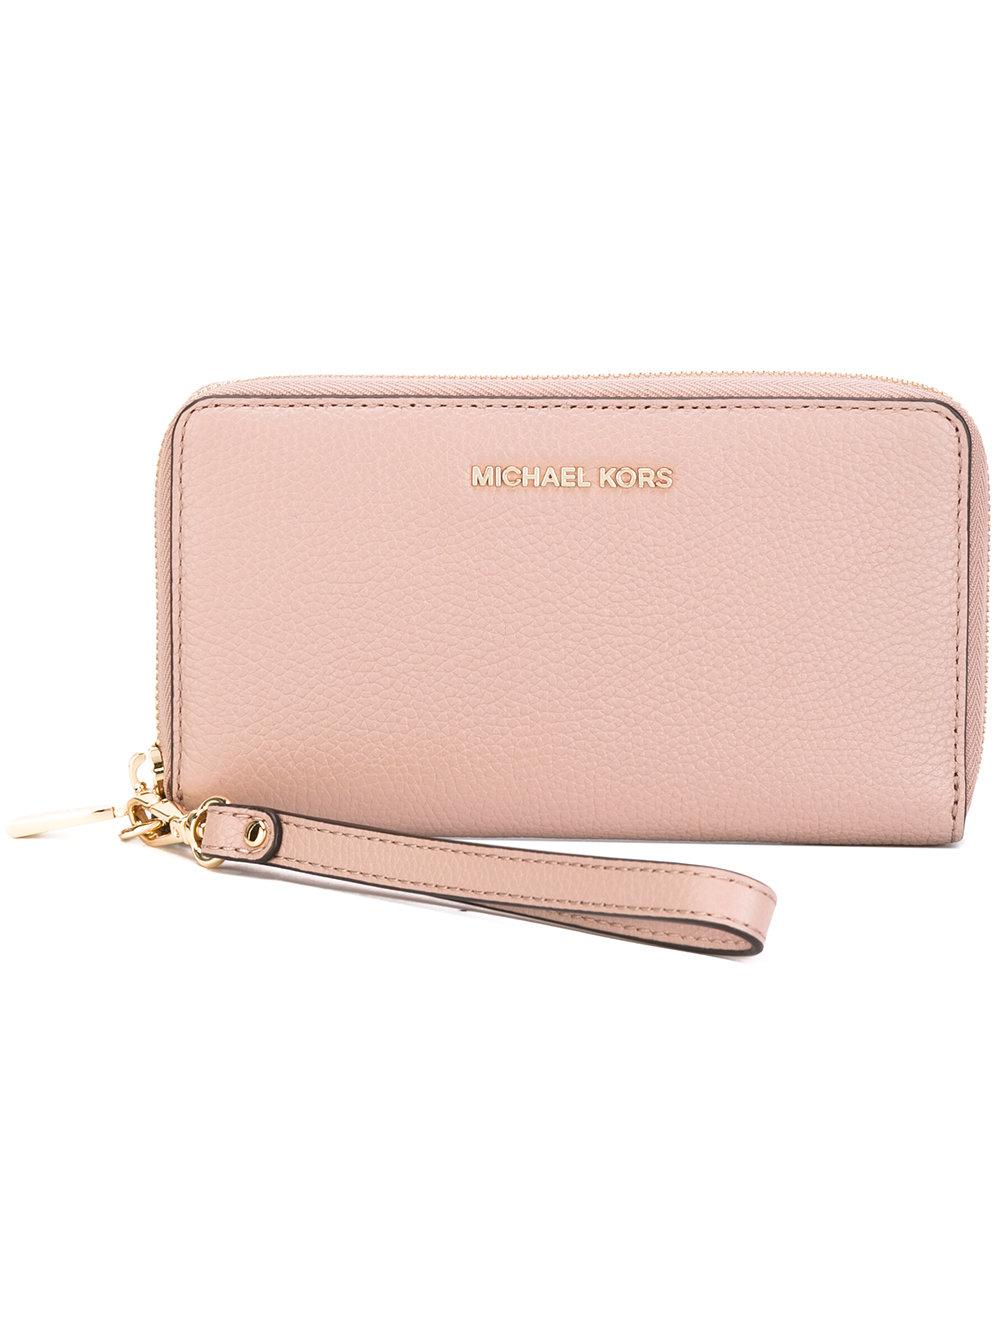 MICHAEL Michael Kors Mercer Large Smartphone Wallet in Pink - Lyst